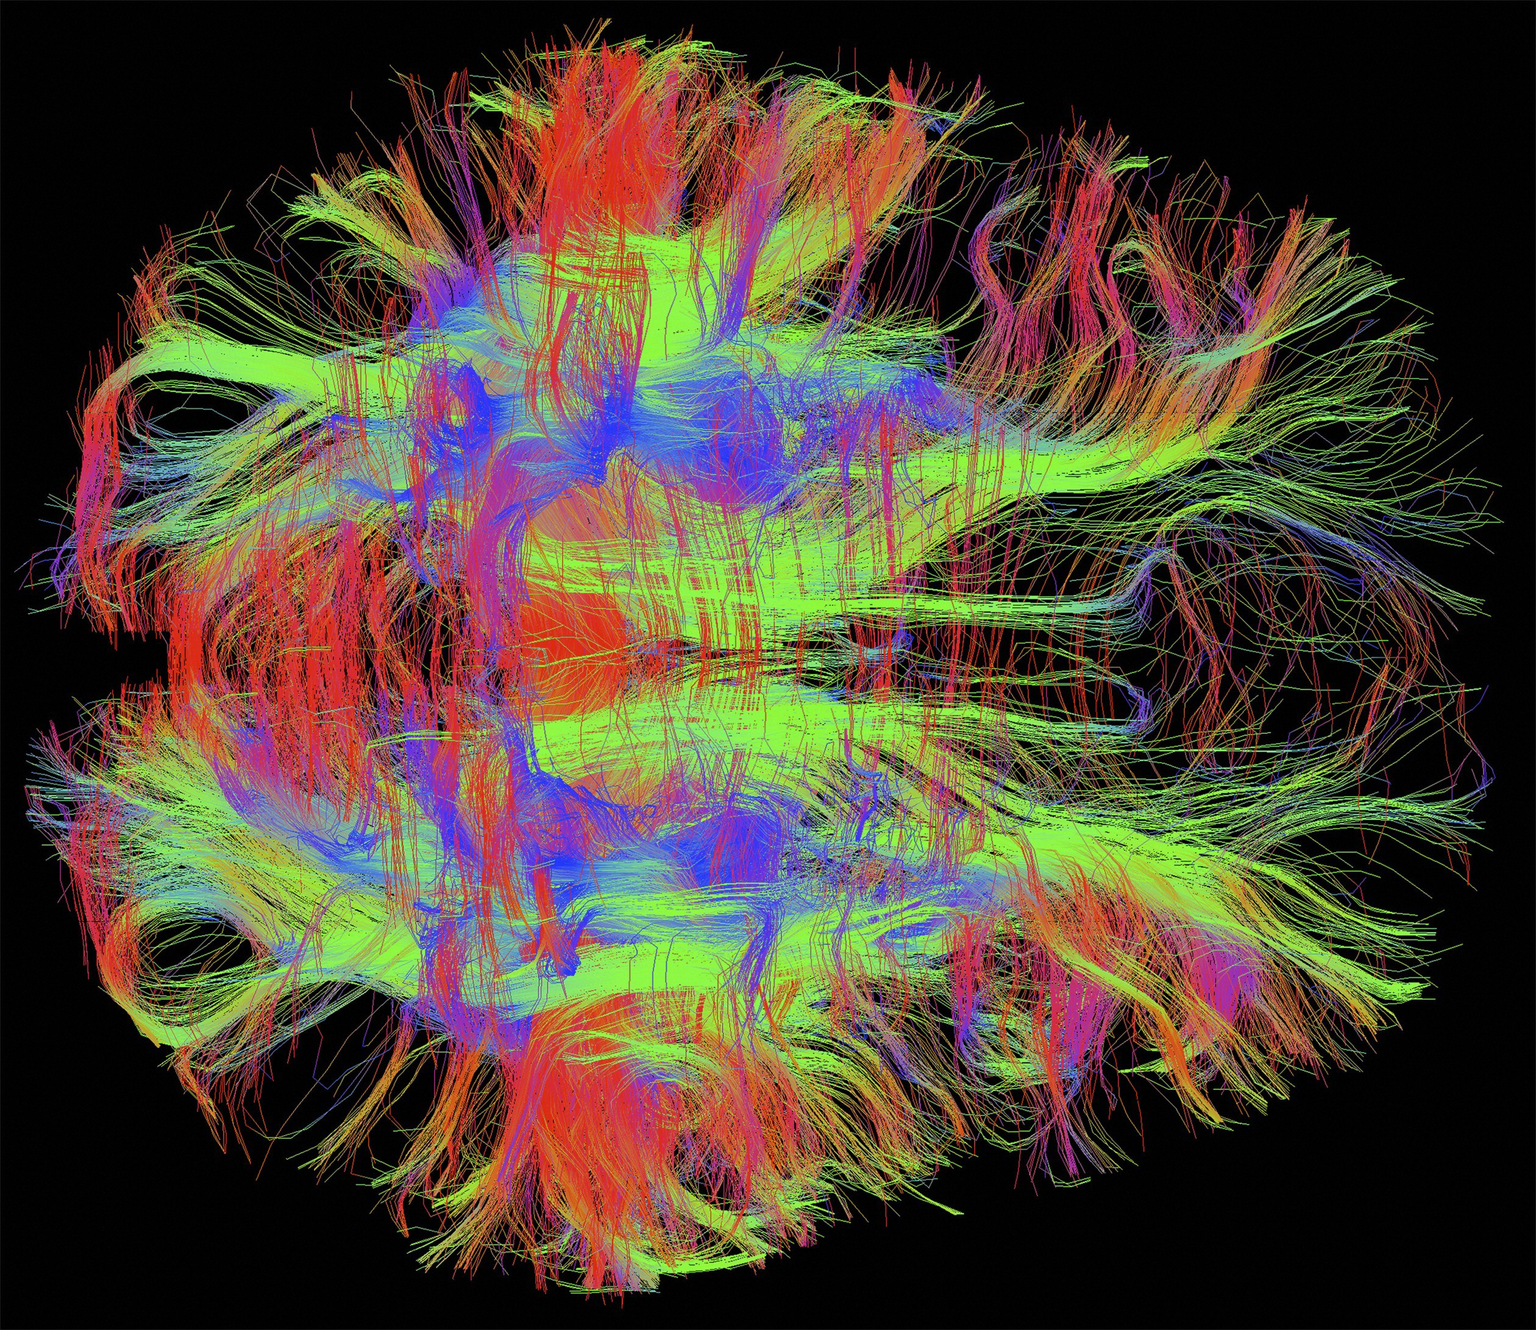 Nerve fibers in a healthy adult human brain